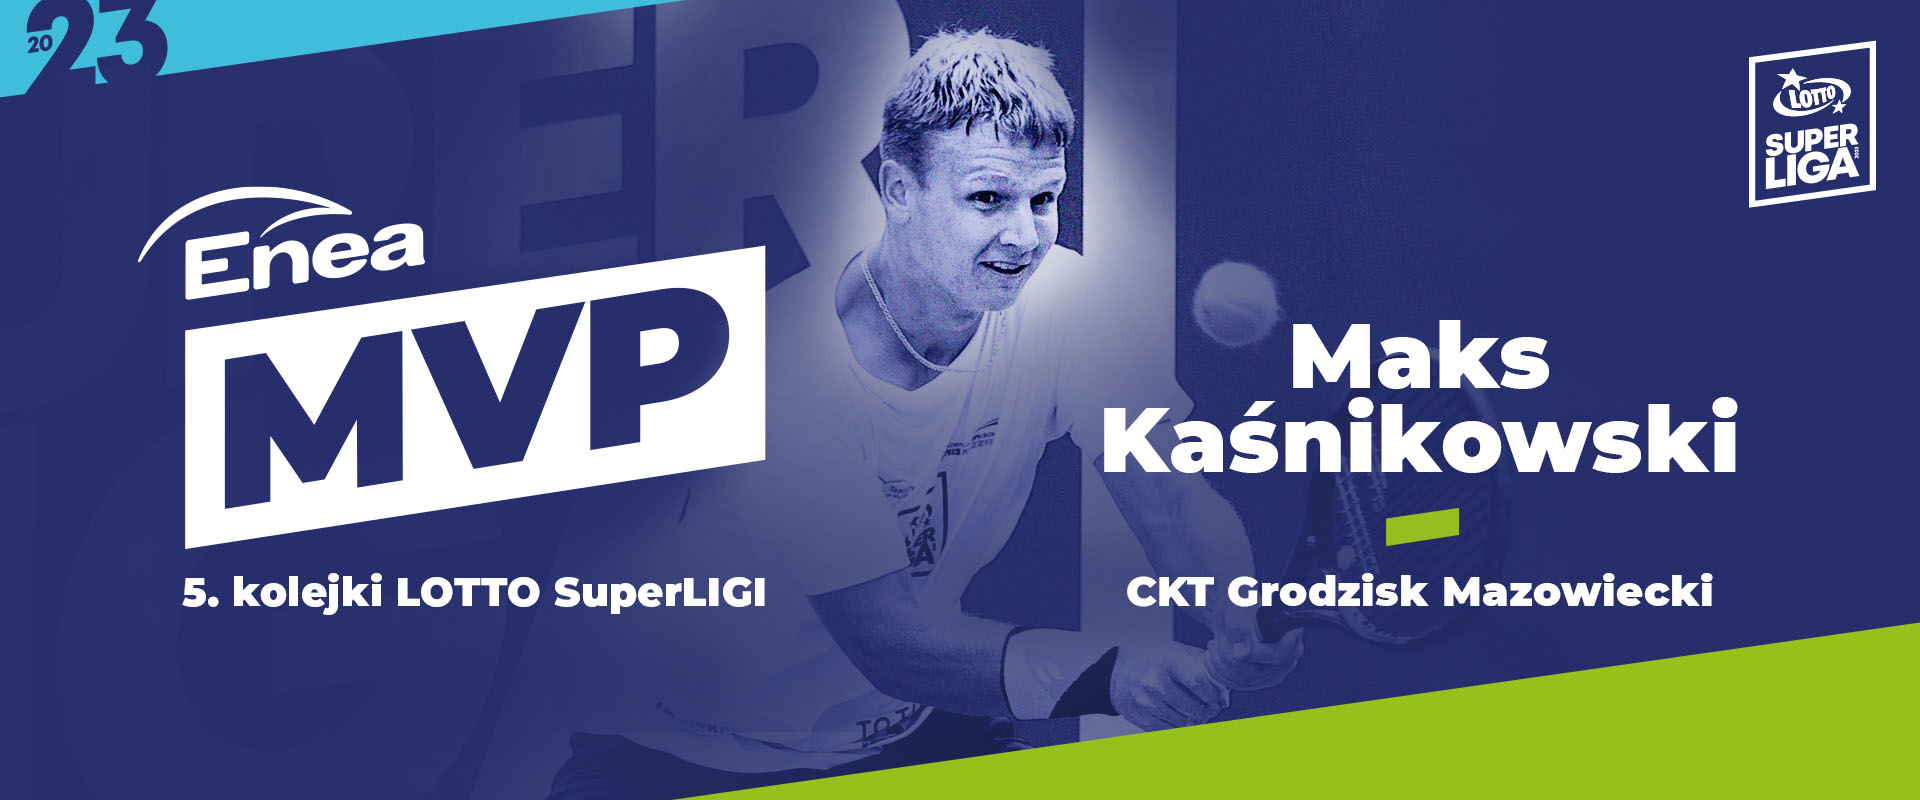 Maks Kaśnikowski - Enea MVP 5. kolejki